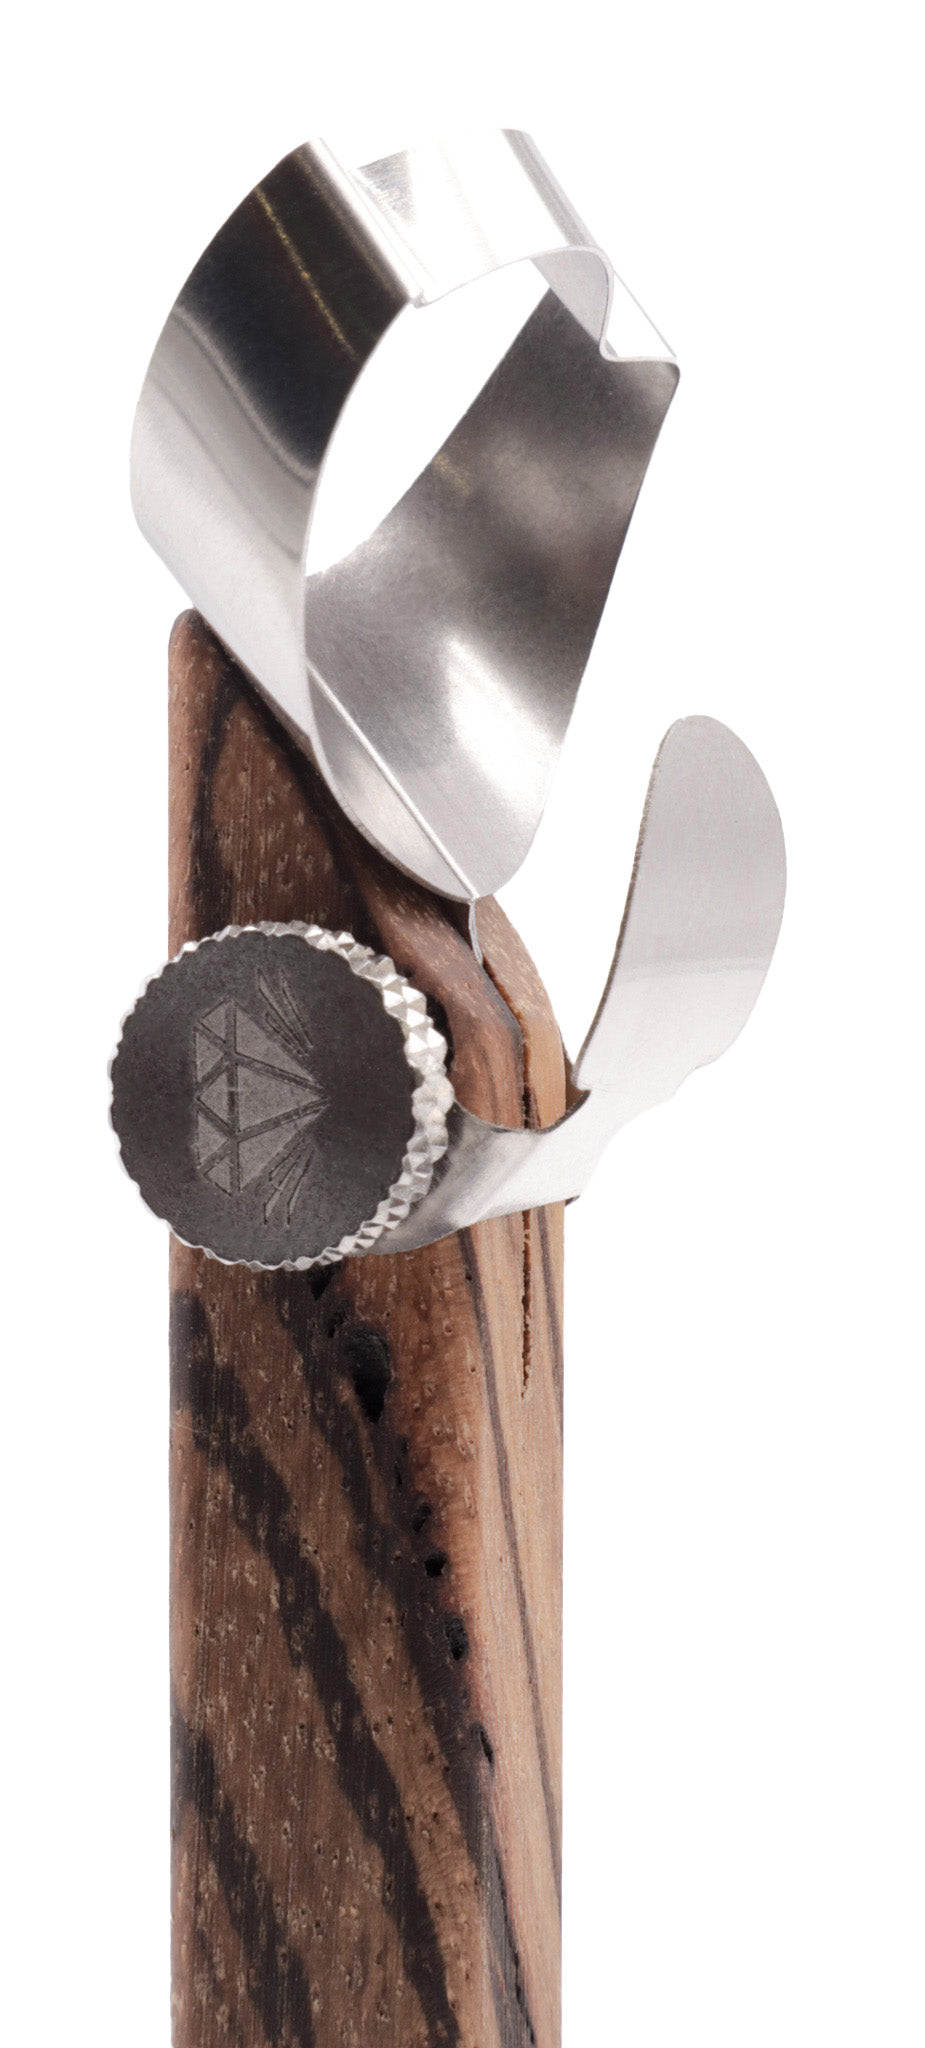 DiamondCore Tools - Koala XL Handheld Clay Extruder (R207)